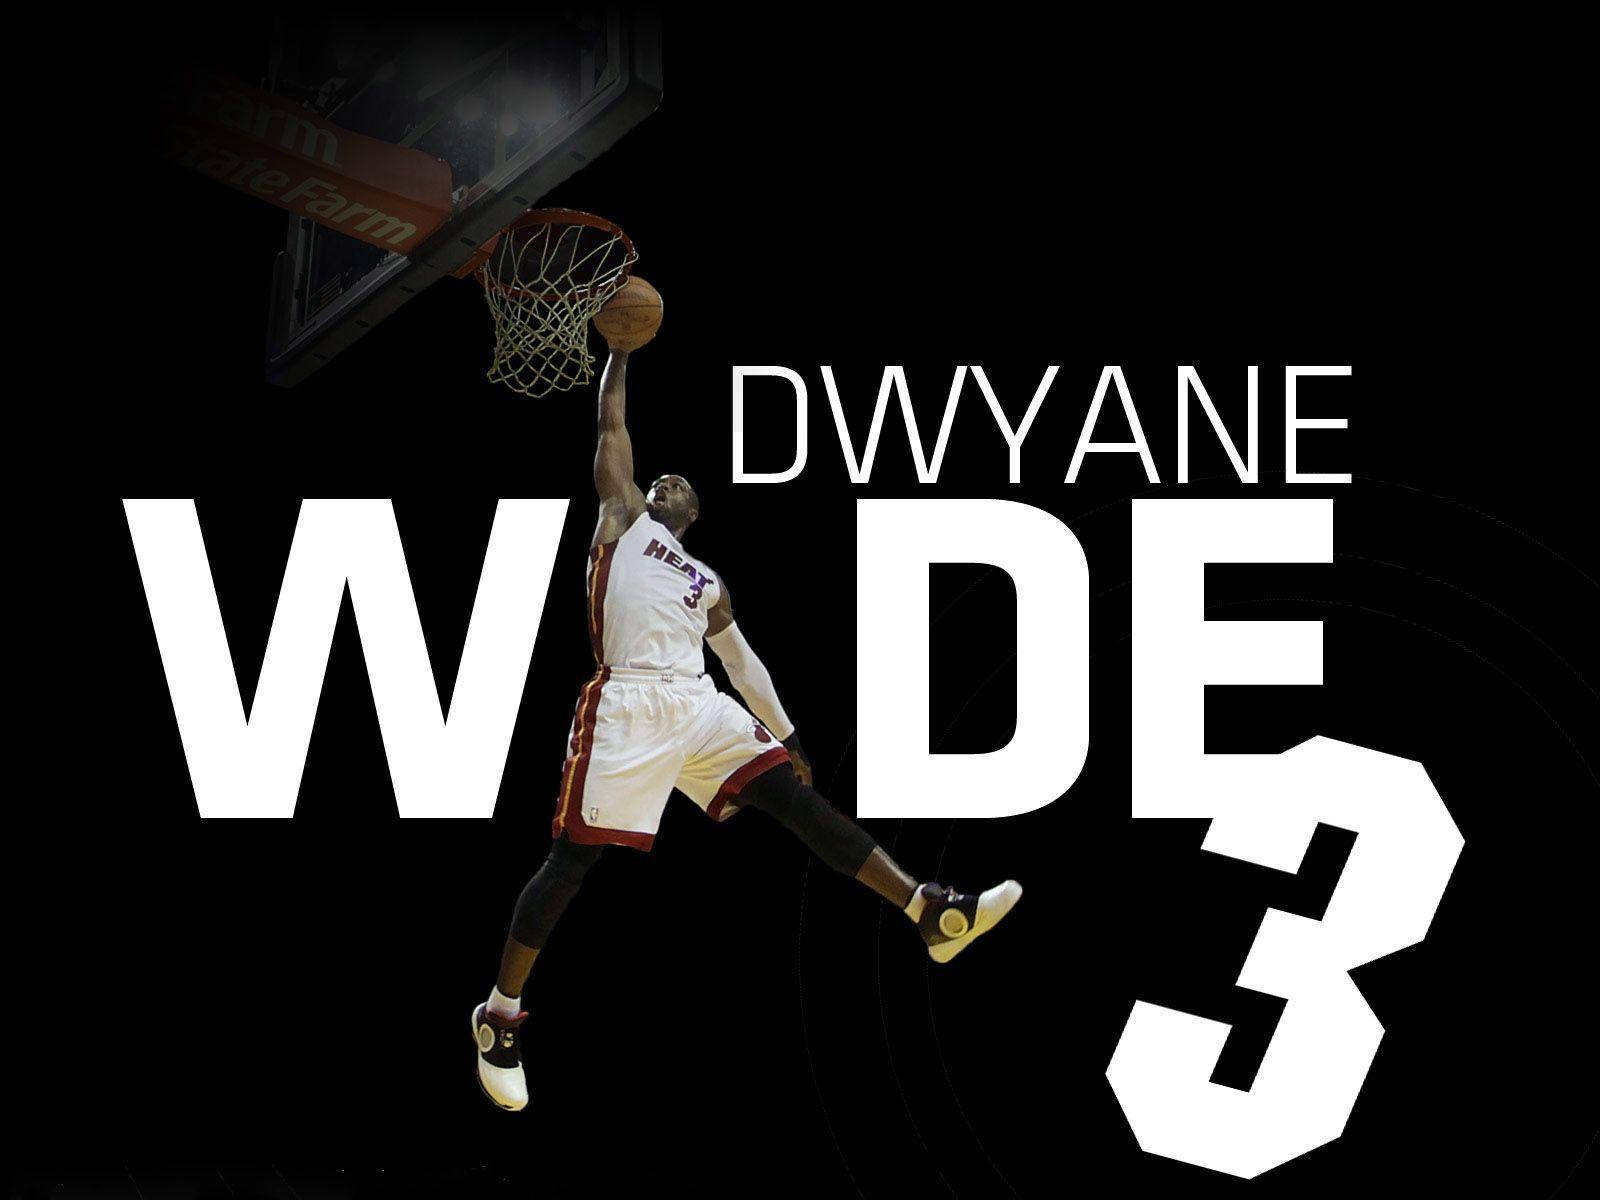 Miami Heat Dwyane Wade Iconic Dunk HD Wallpaper